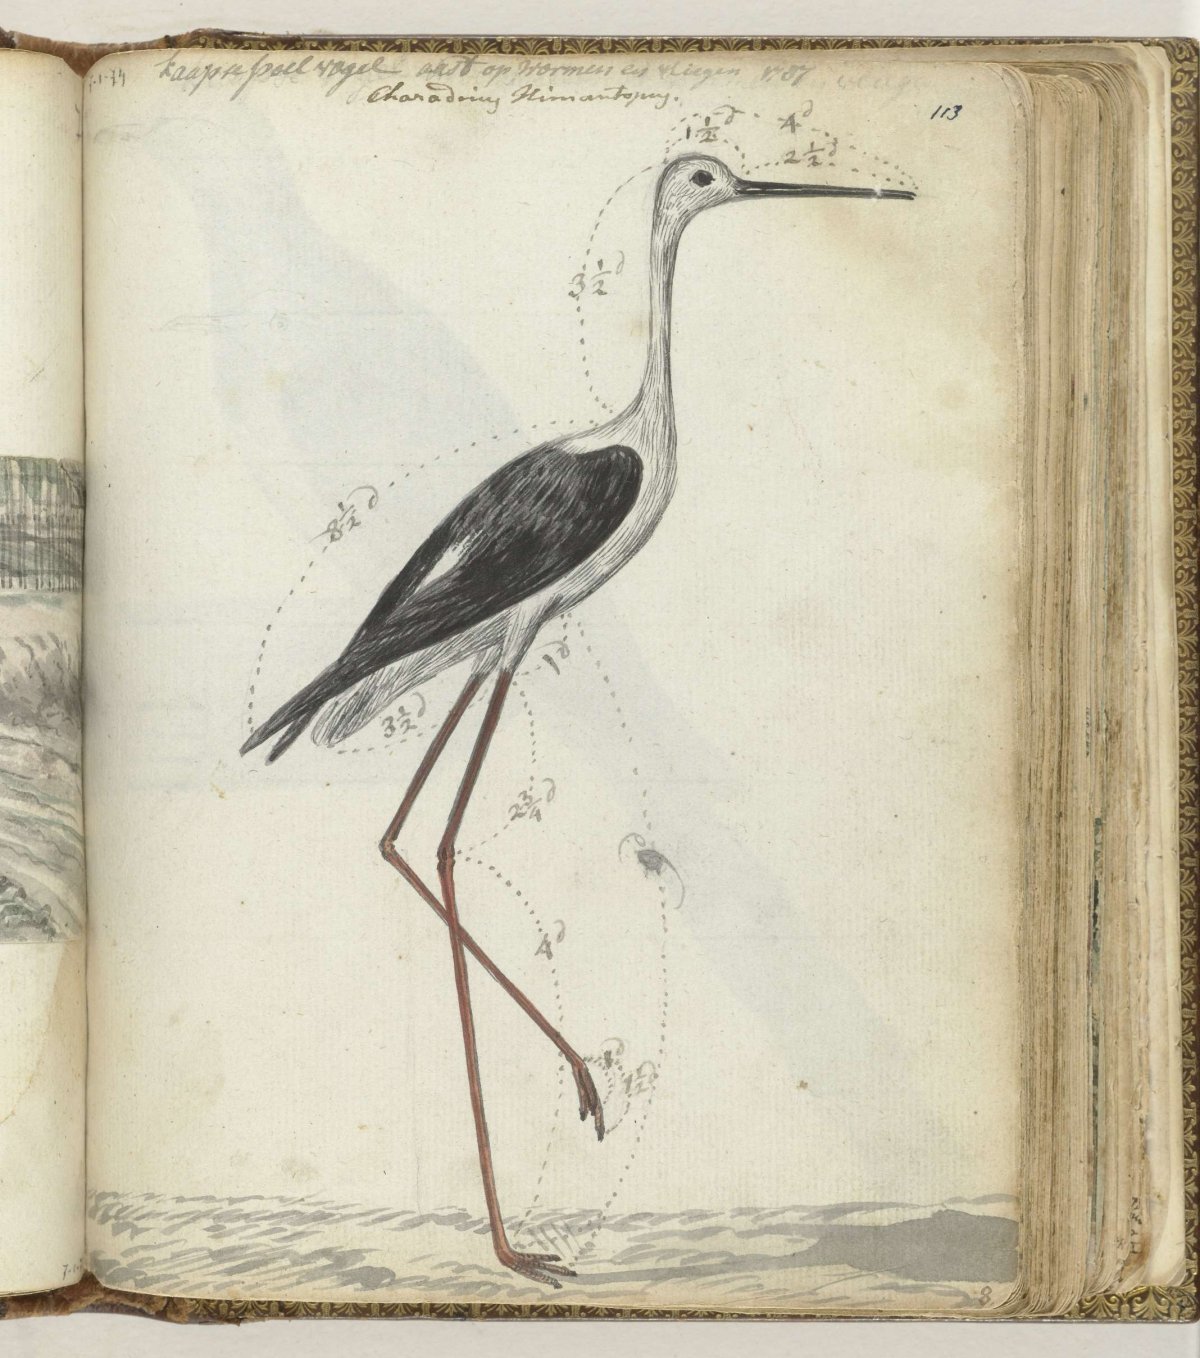 Kaapse poelvogel, Jan Brandes, 1786 - 1787